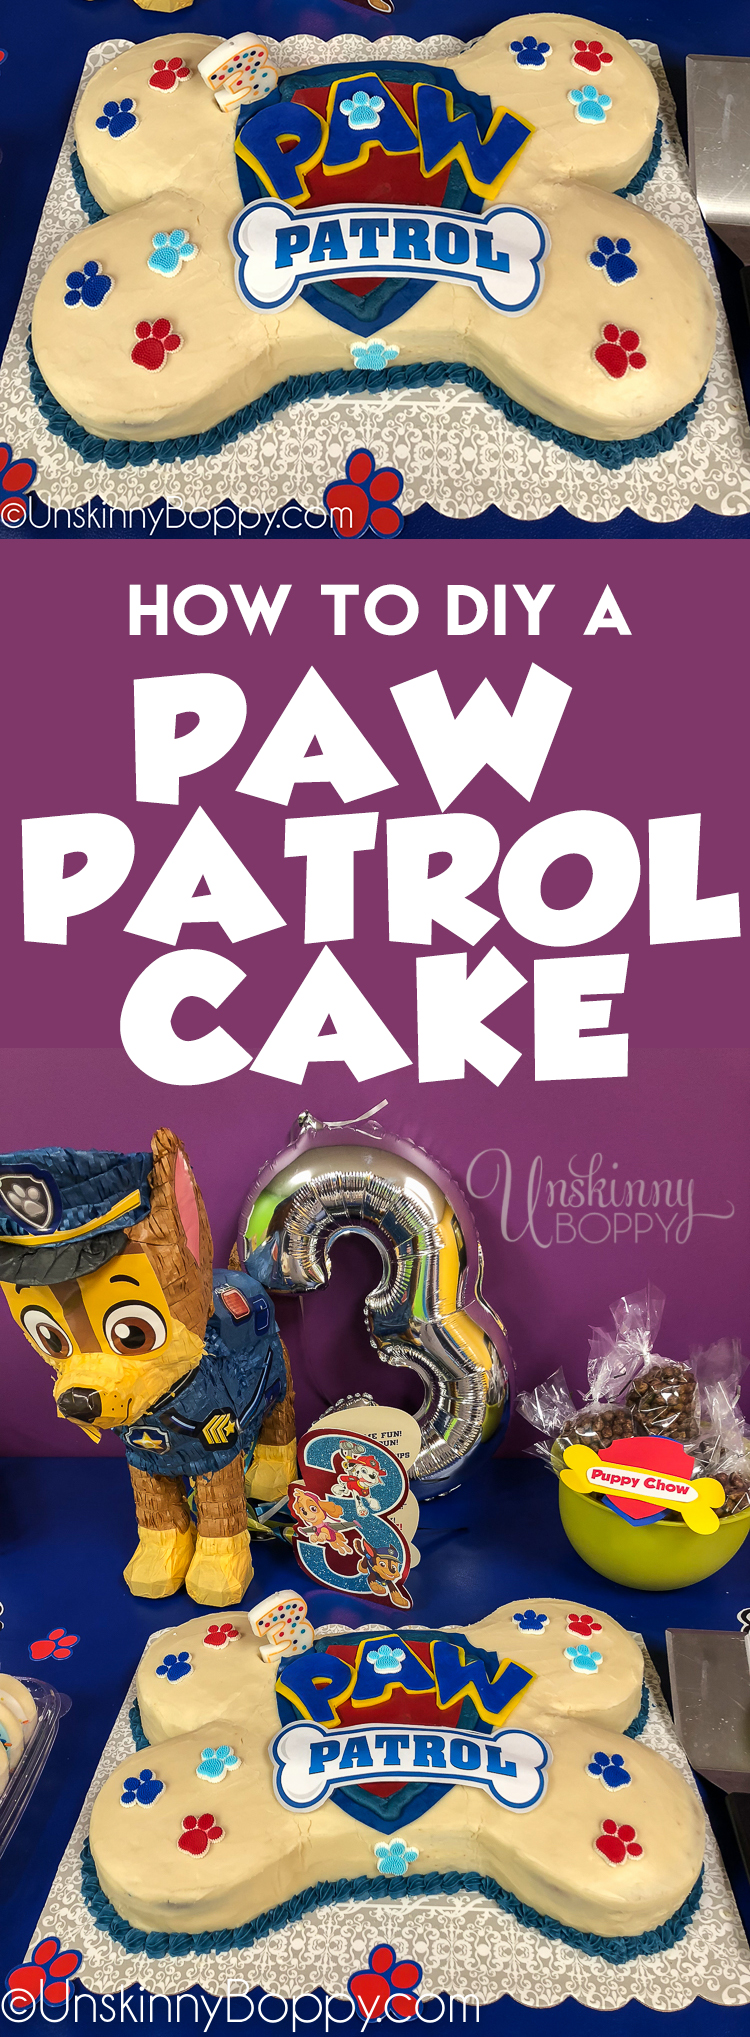 How to Make a Paw Patrol Cake